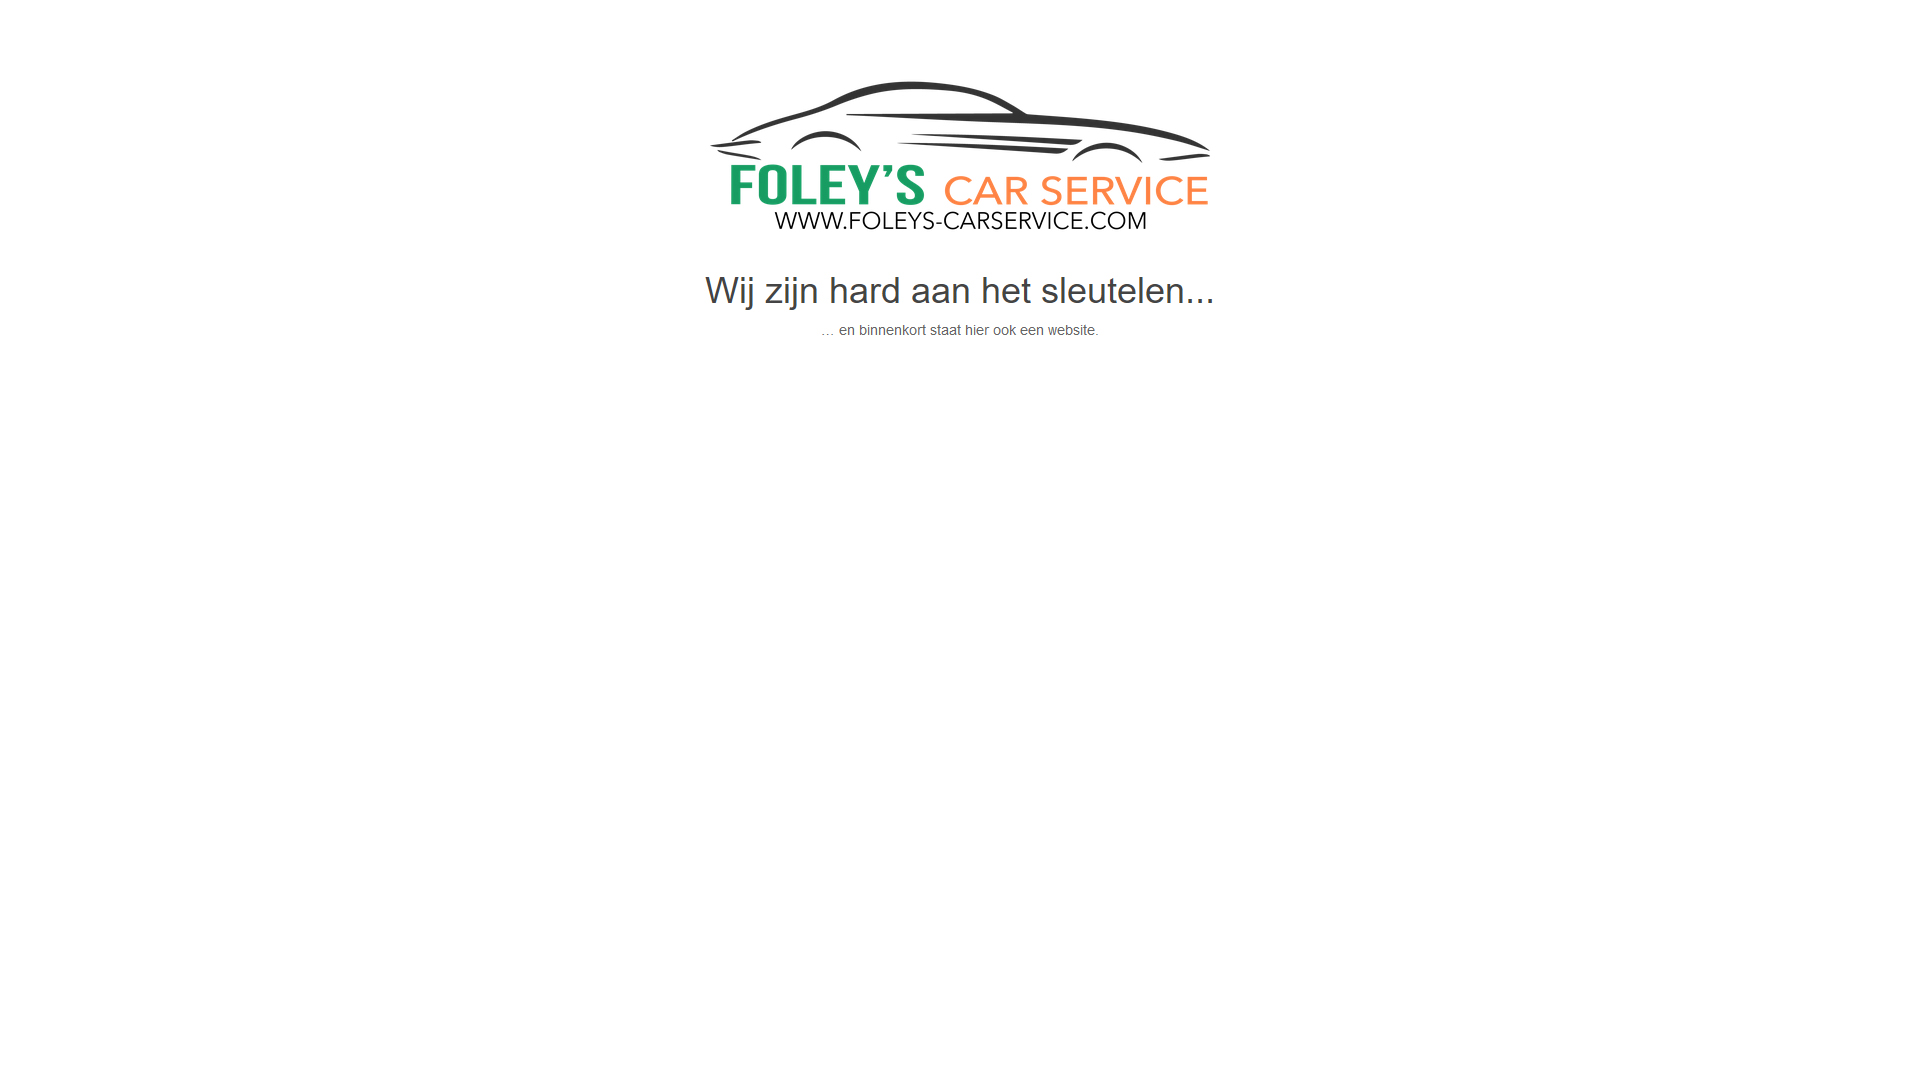 Foley’s Car Service (w.i.p.)